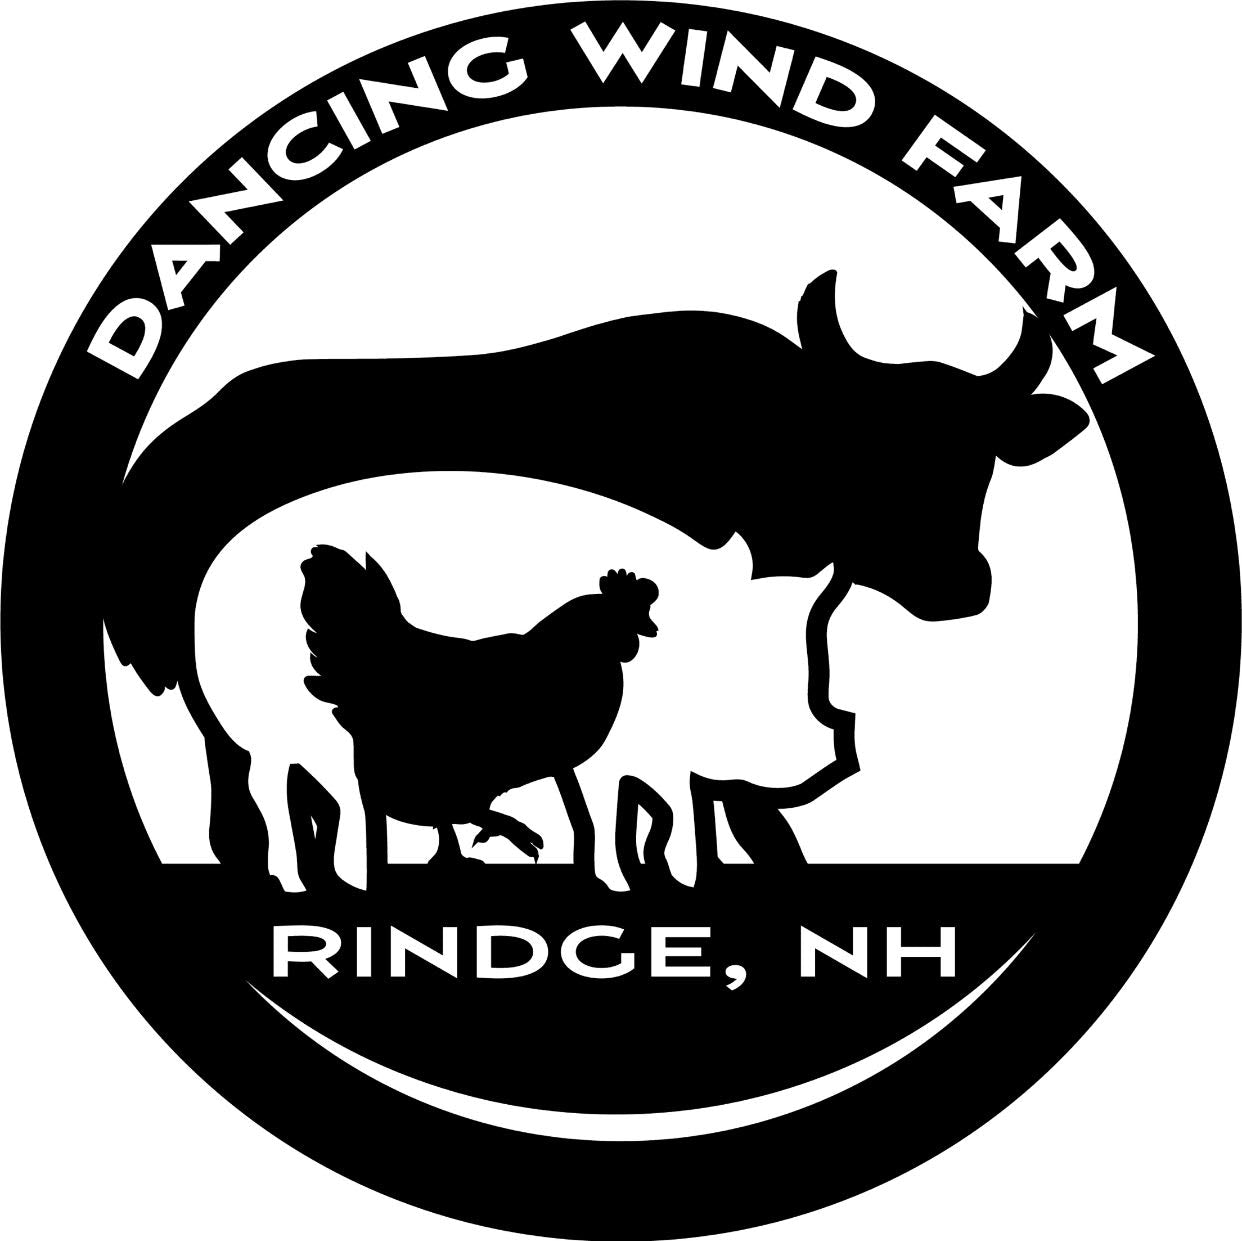 Dancing Wind Farm